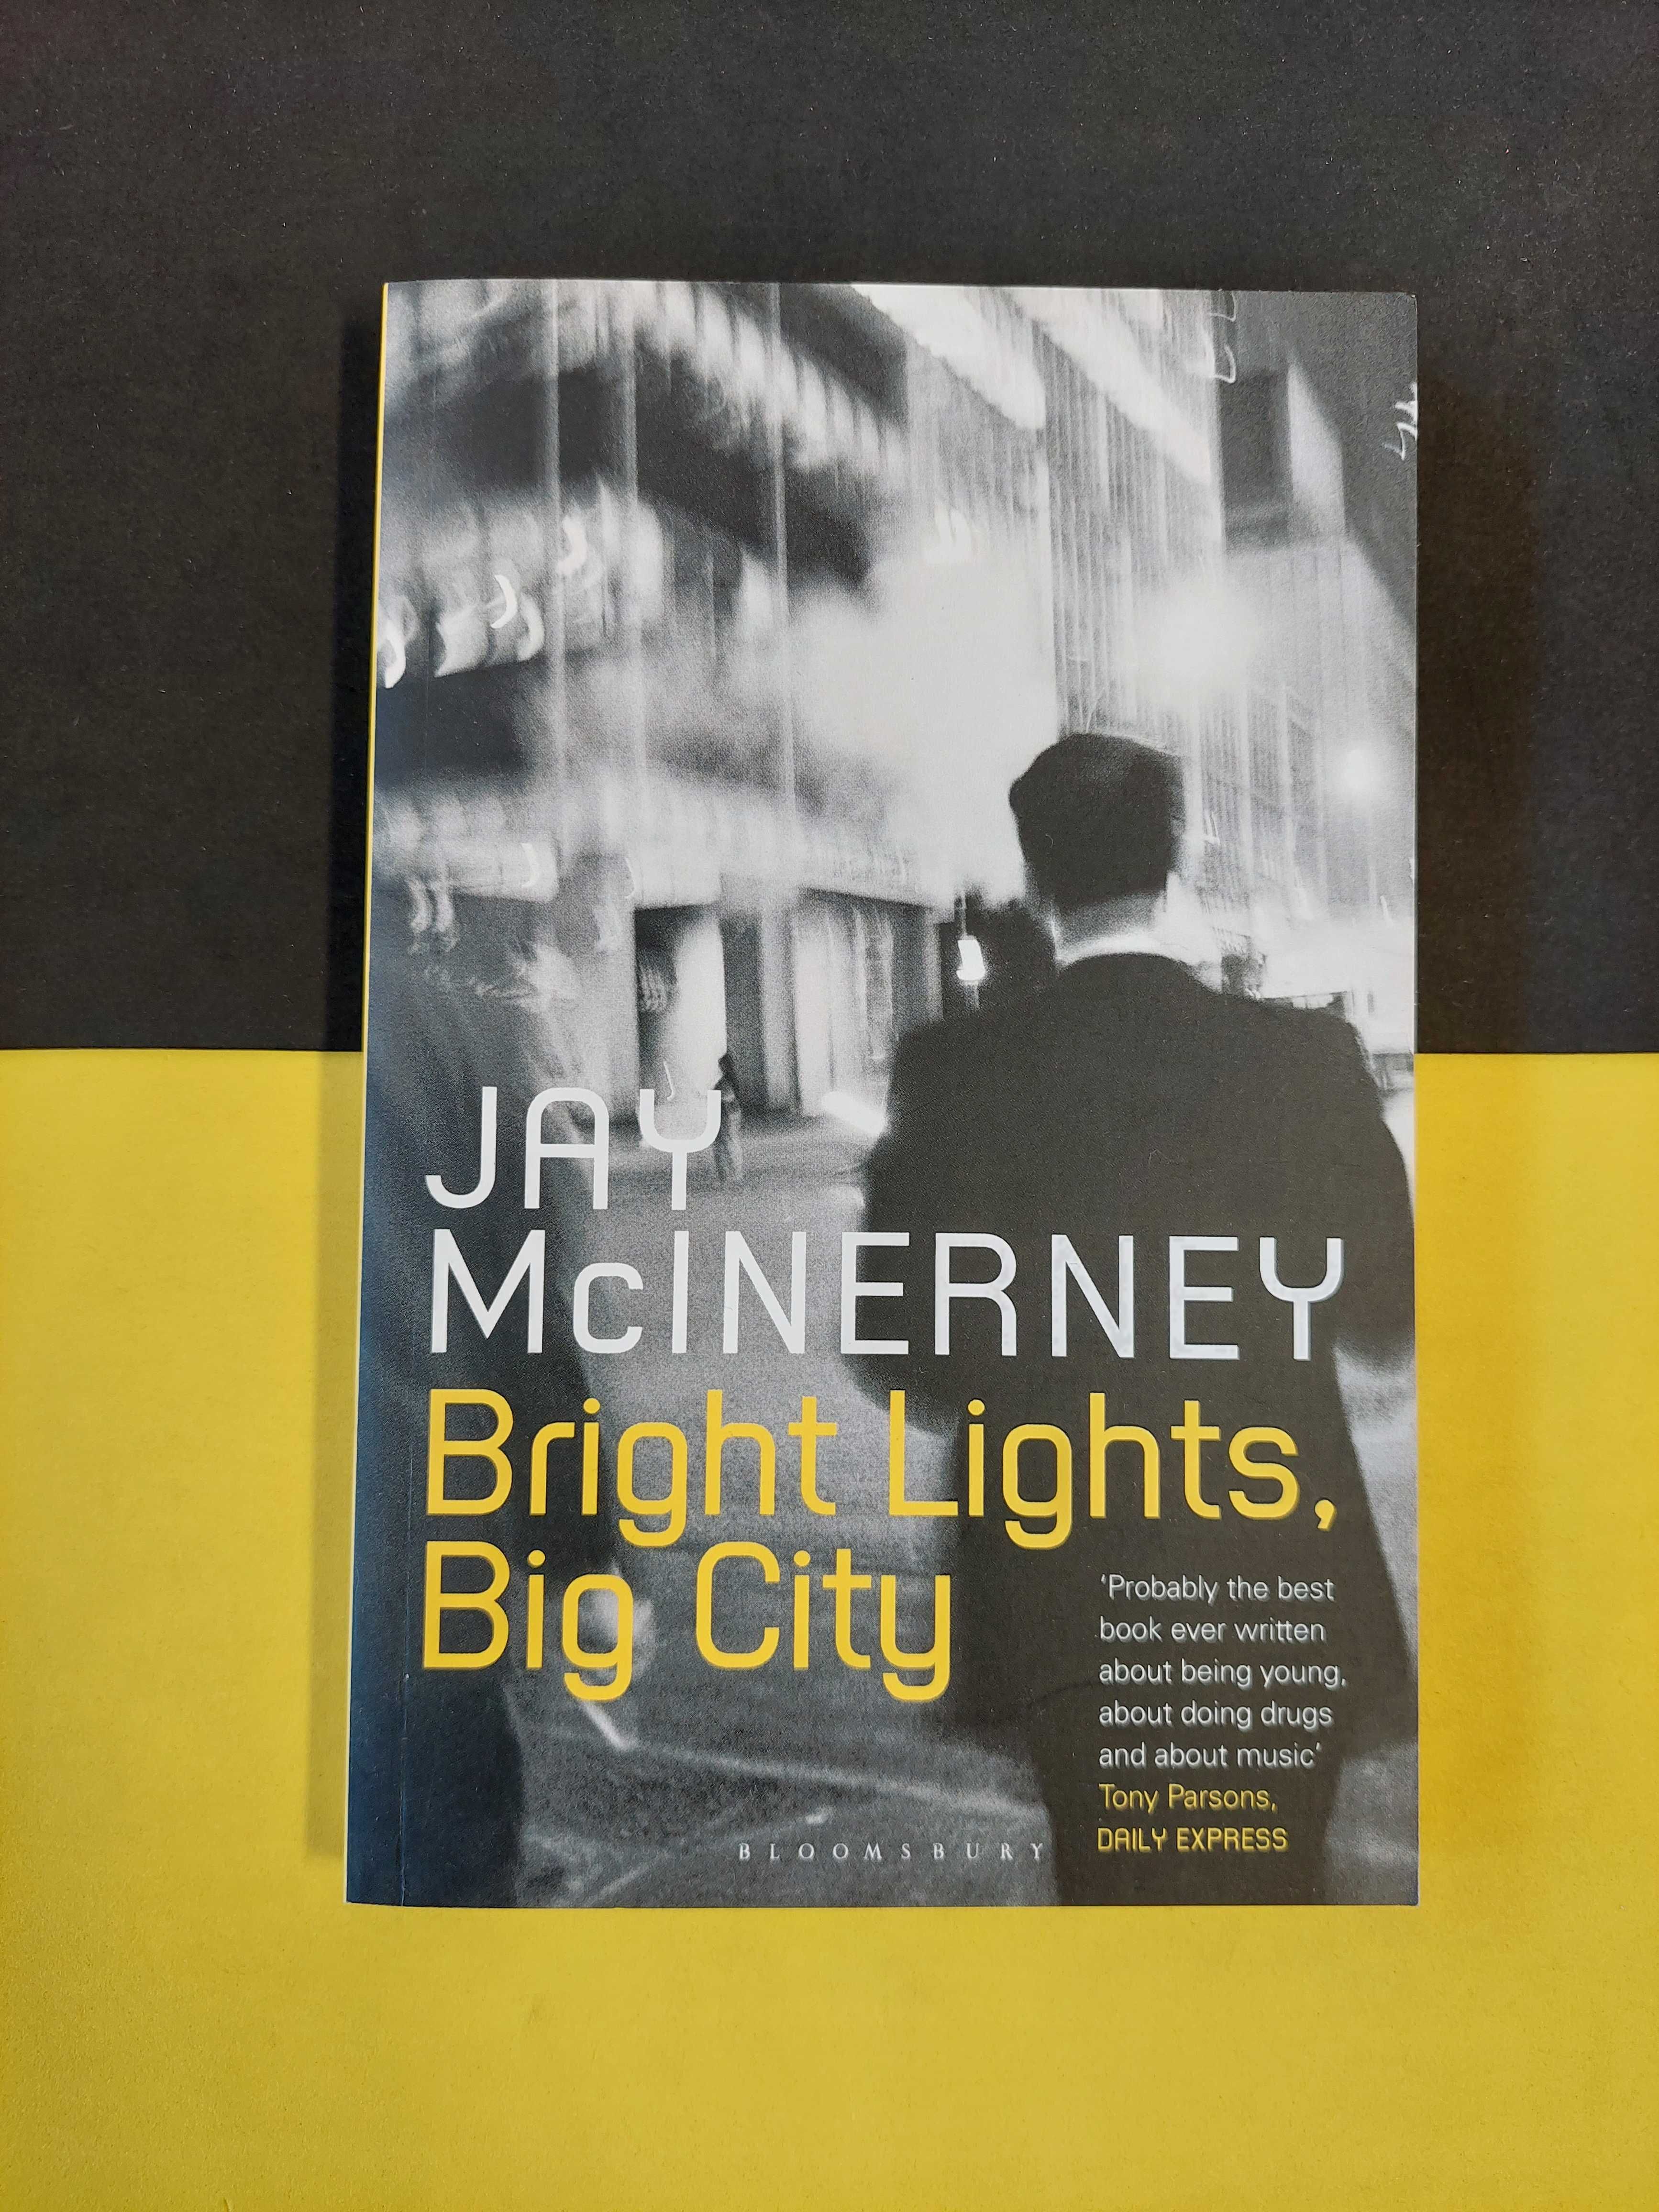 Jay Mcinerney - Bright lights, big city